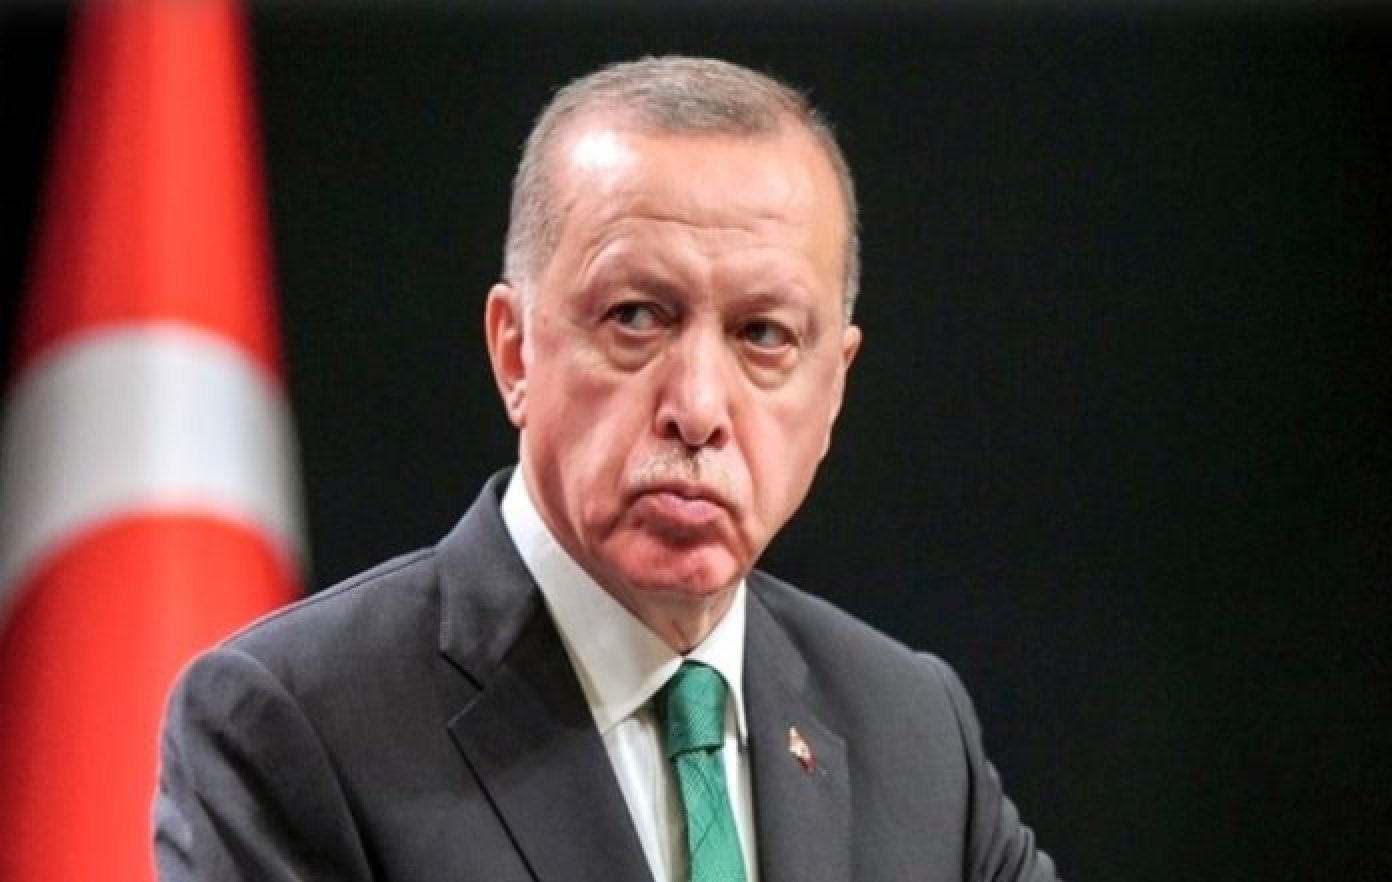 image Varosha, gas, recognition – five scenarios being touted as Erdogan’s ‘good news’